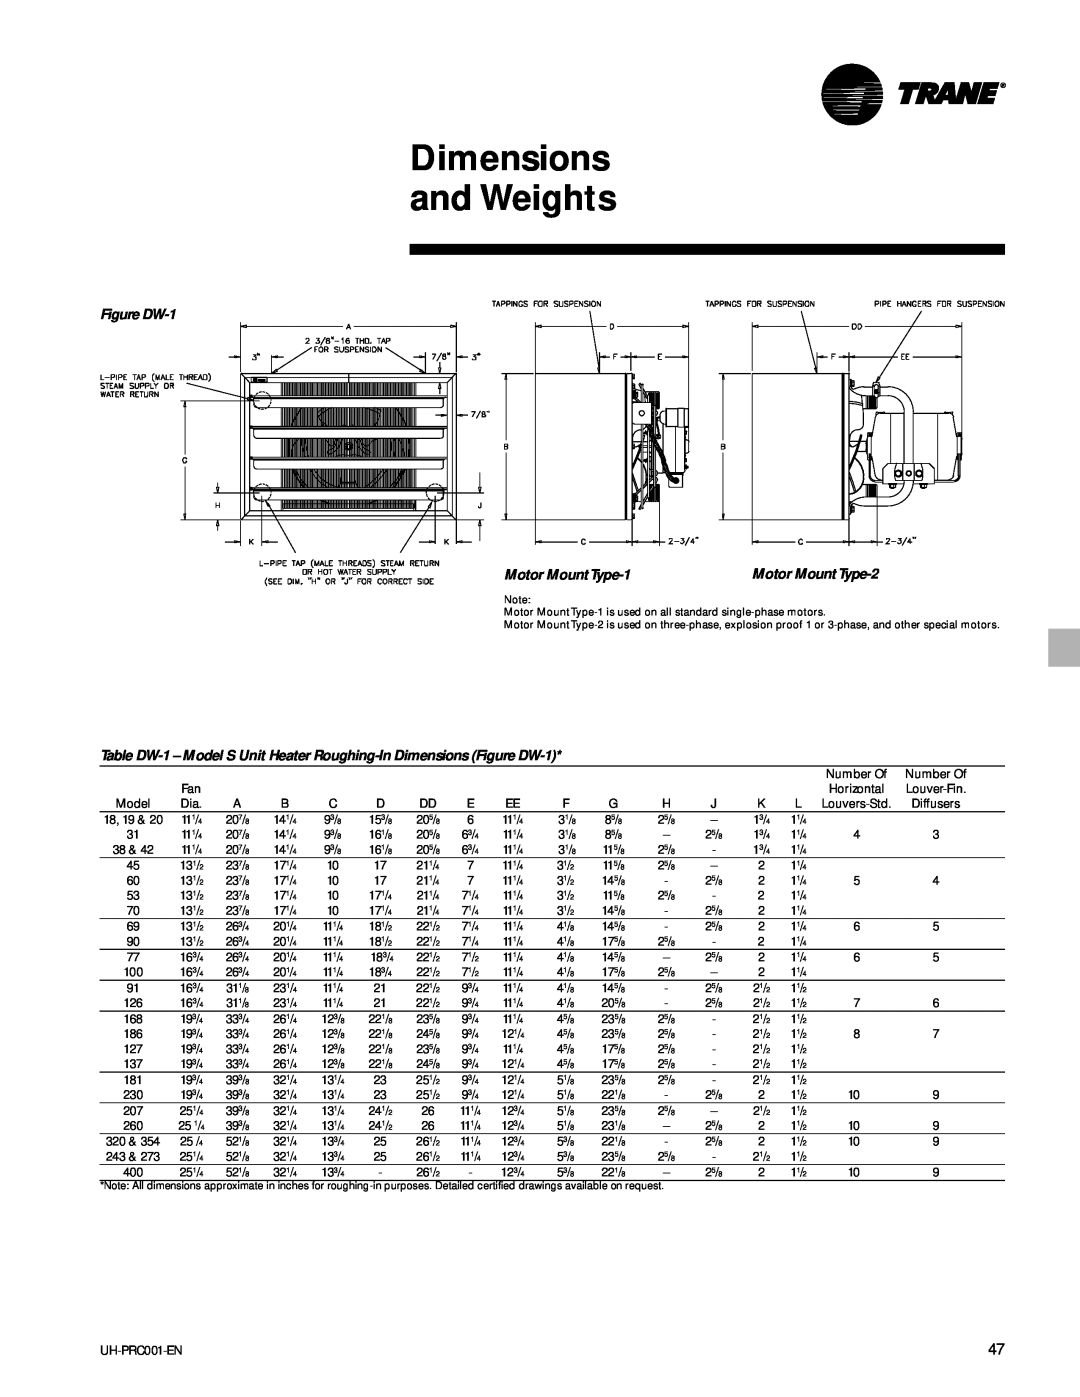 Trane UH-PRC001-EN manual Dimensions and Weights, Figure DW-1, Motor MountType-1, Motor MountType-2 